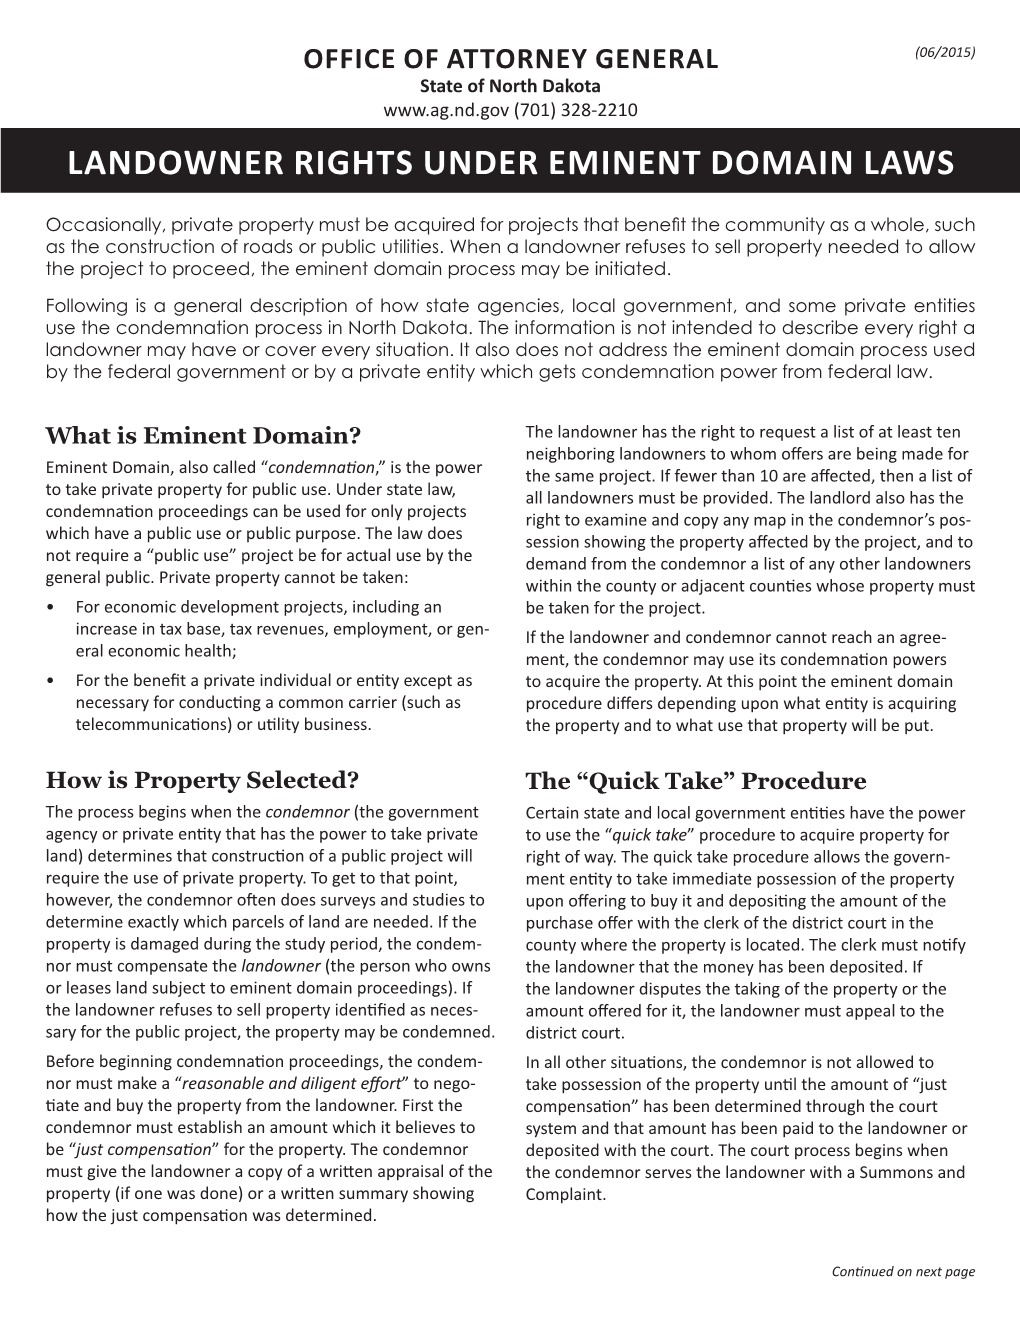 Landowner Rights Under Eminent Domain Laws